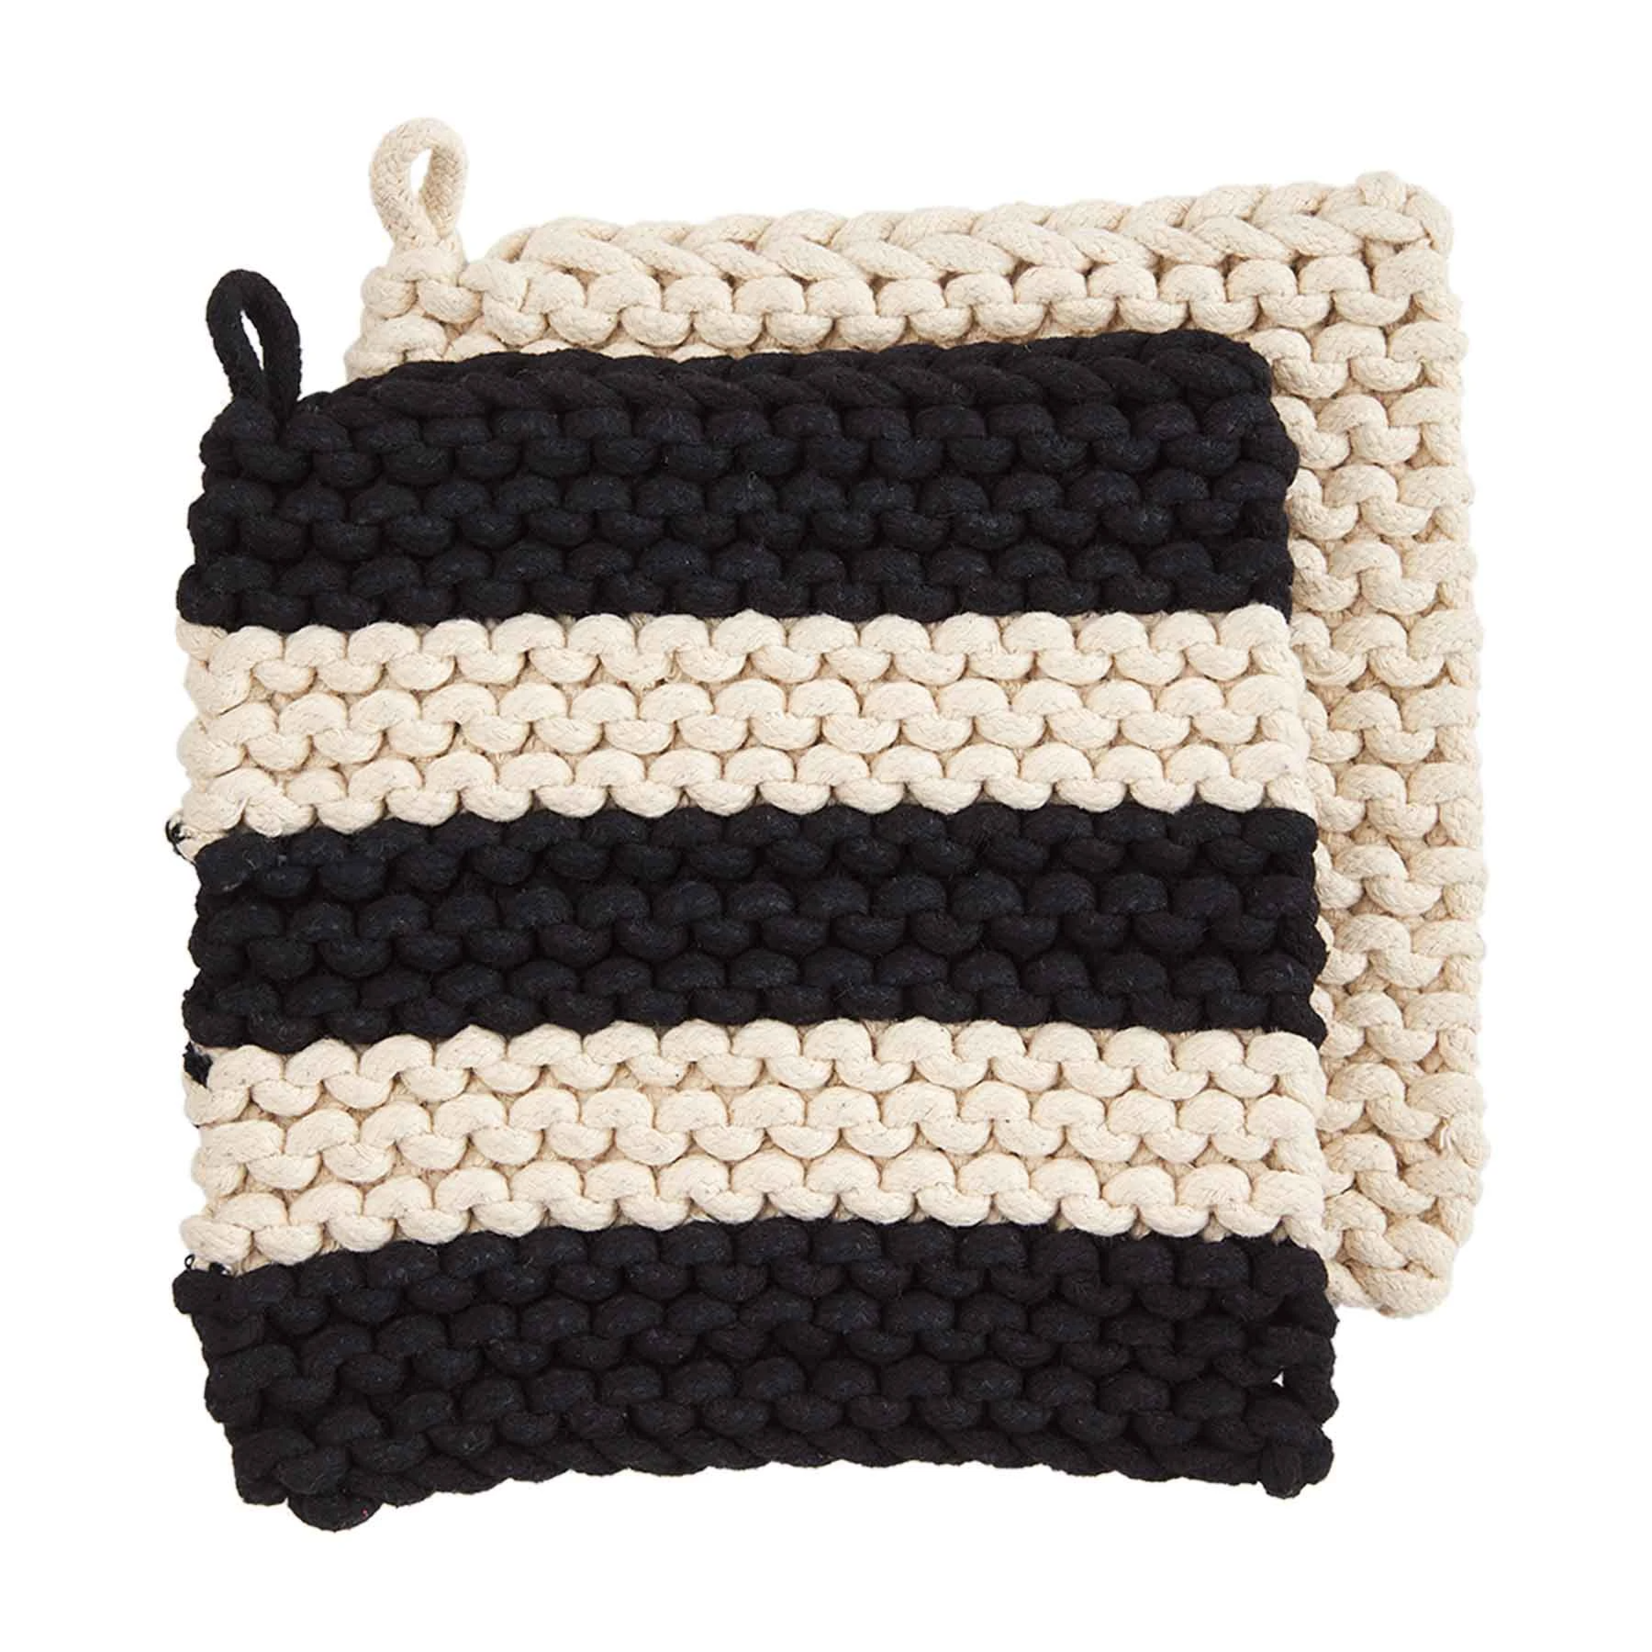 Mud Pie Black Striped Crochet Potholder set/2